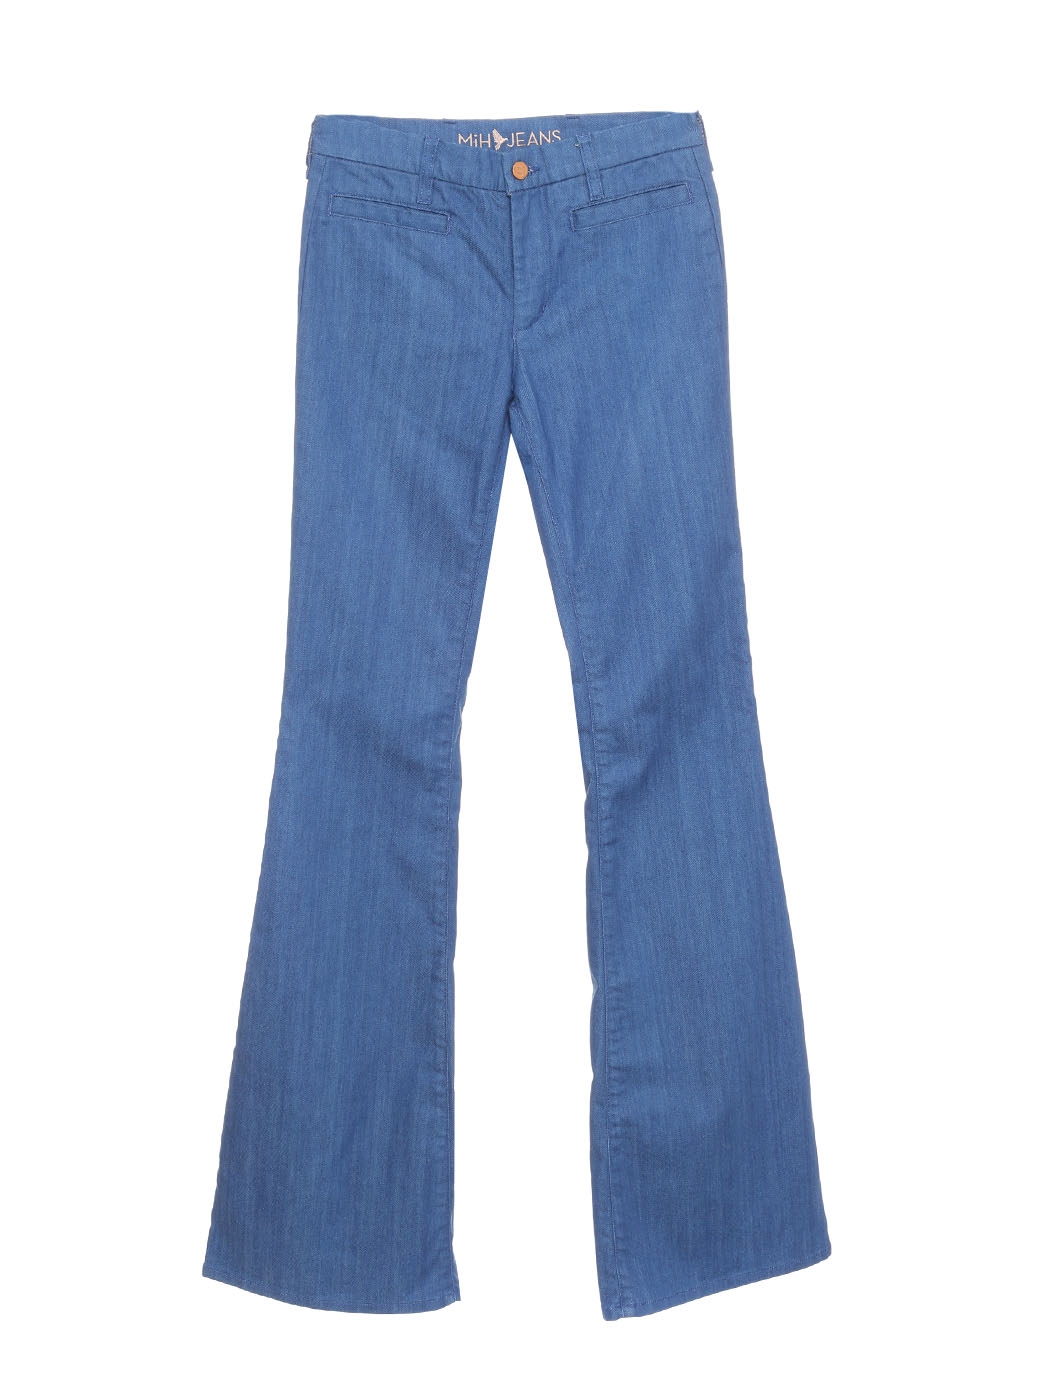 Boutique MIH Bright blue denim Marrakesh mid rise kick Flare Jeans Retail €240 Size 25